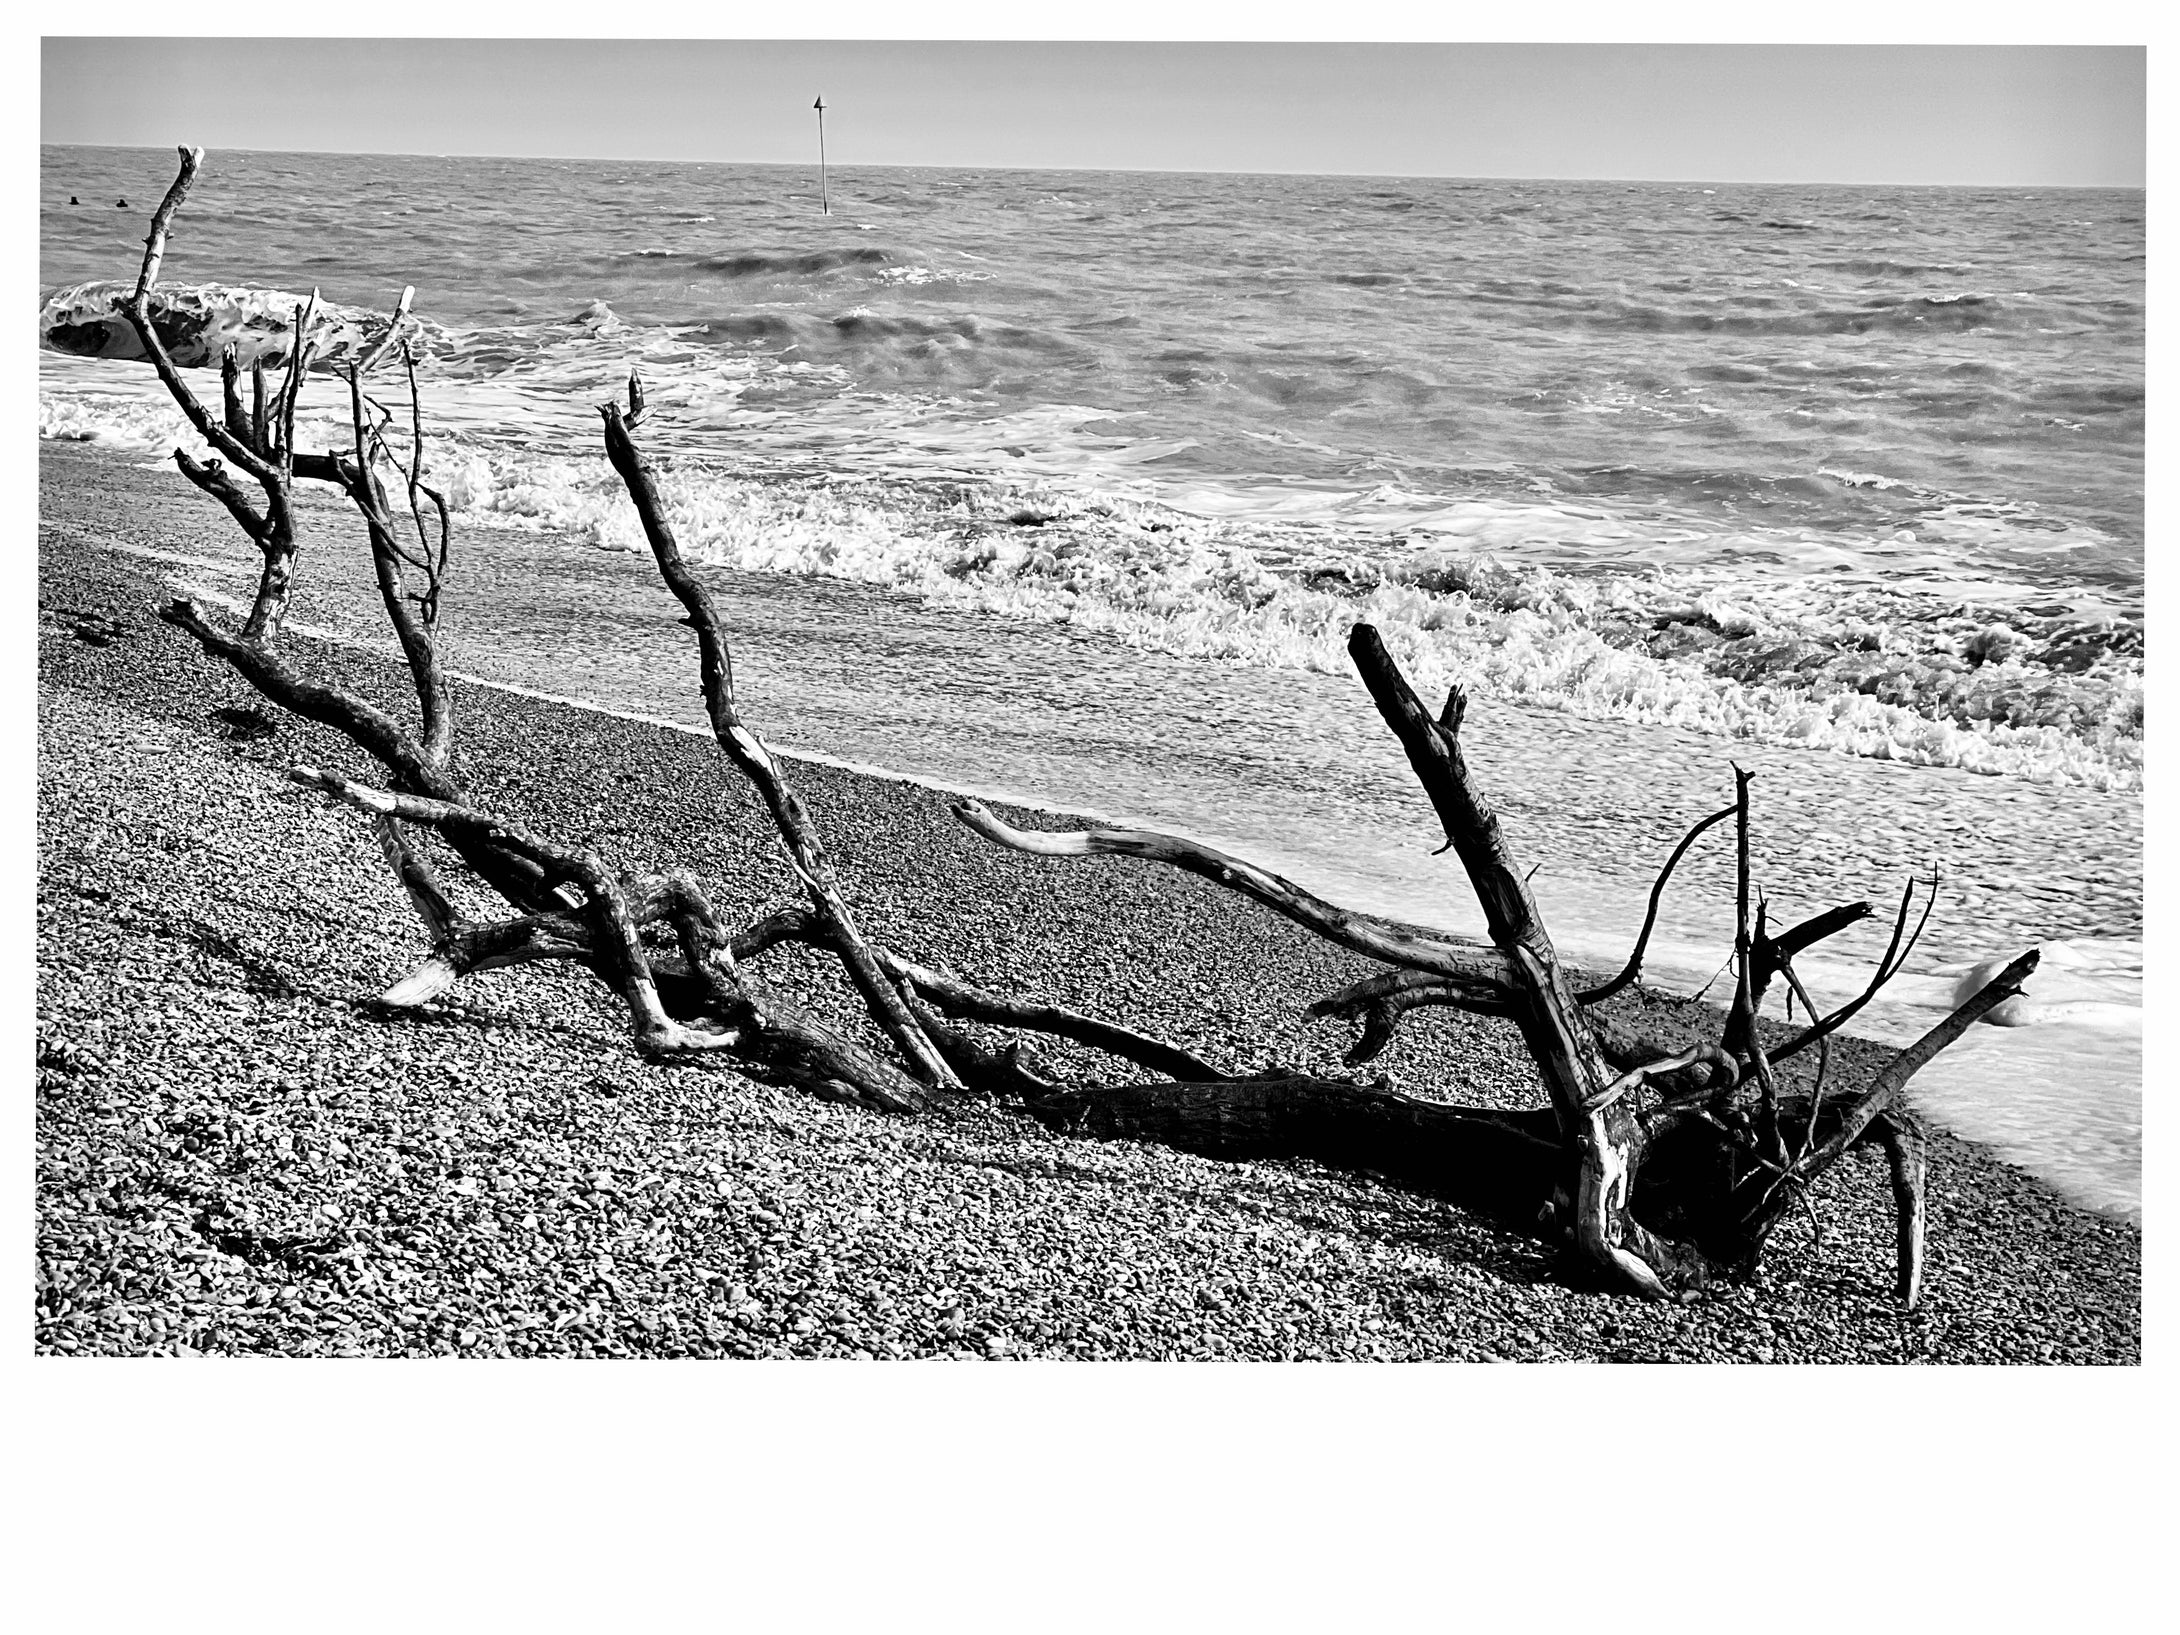 Driftwood on Bawdsey beach, Suffolk